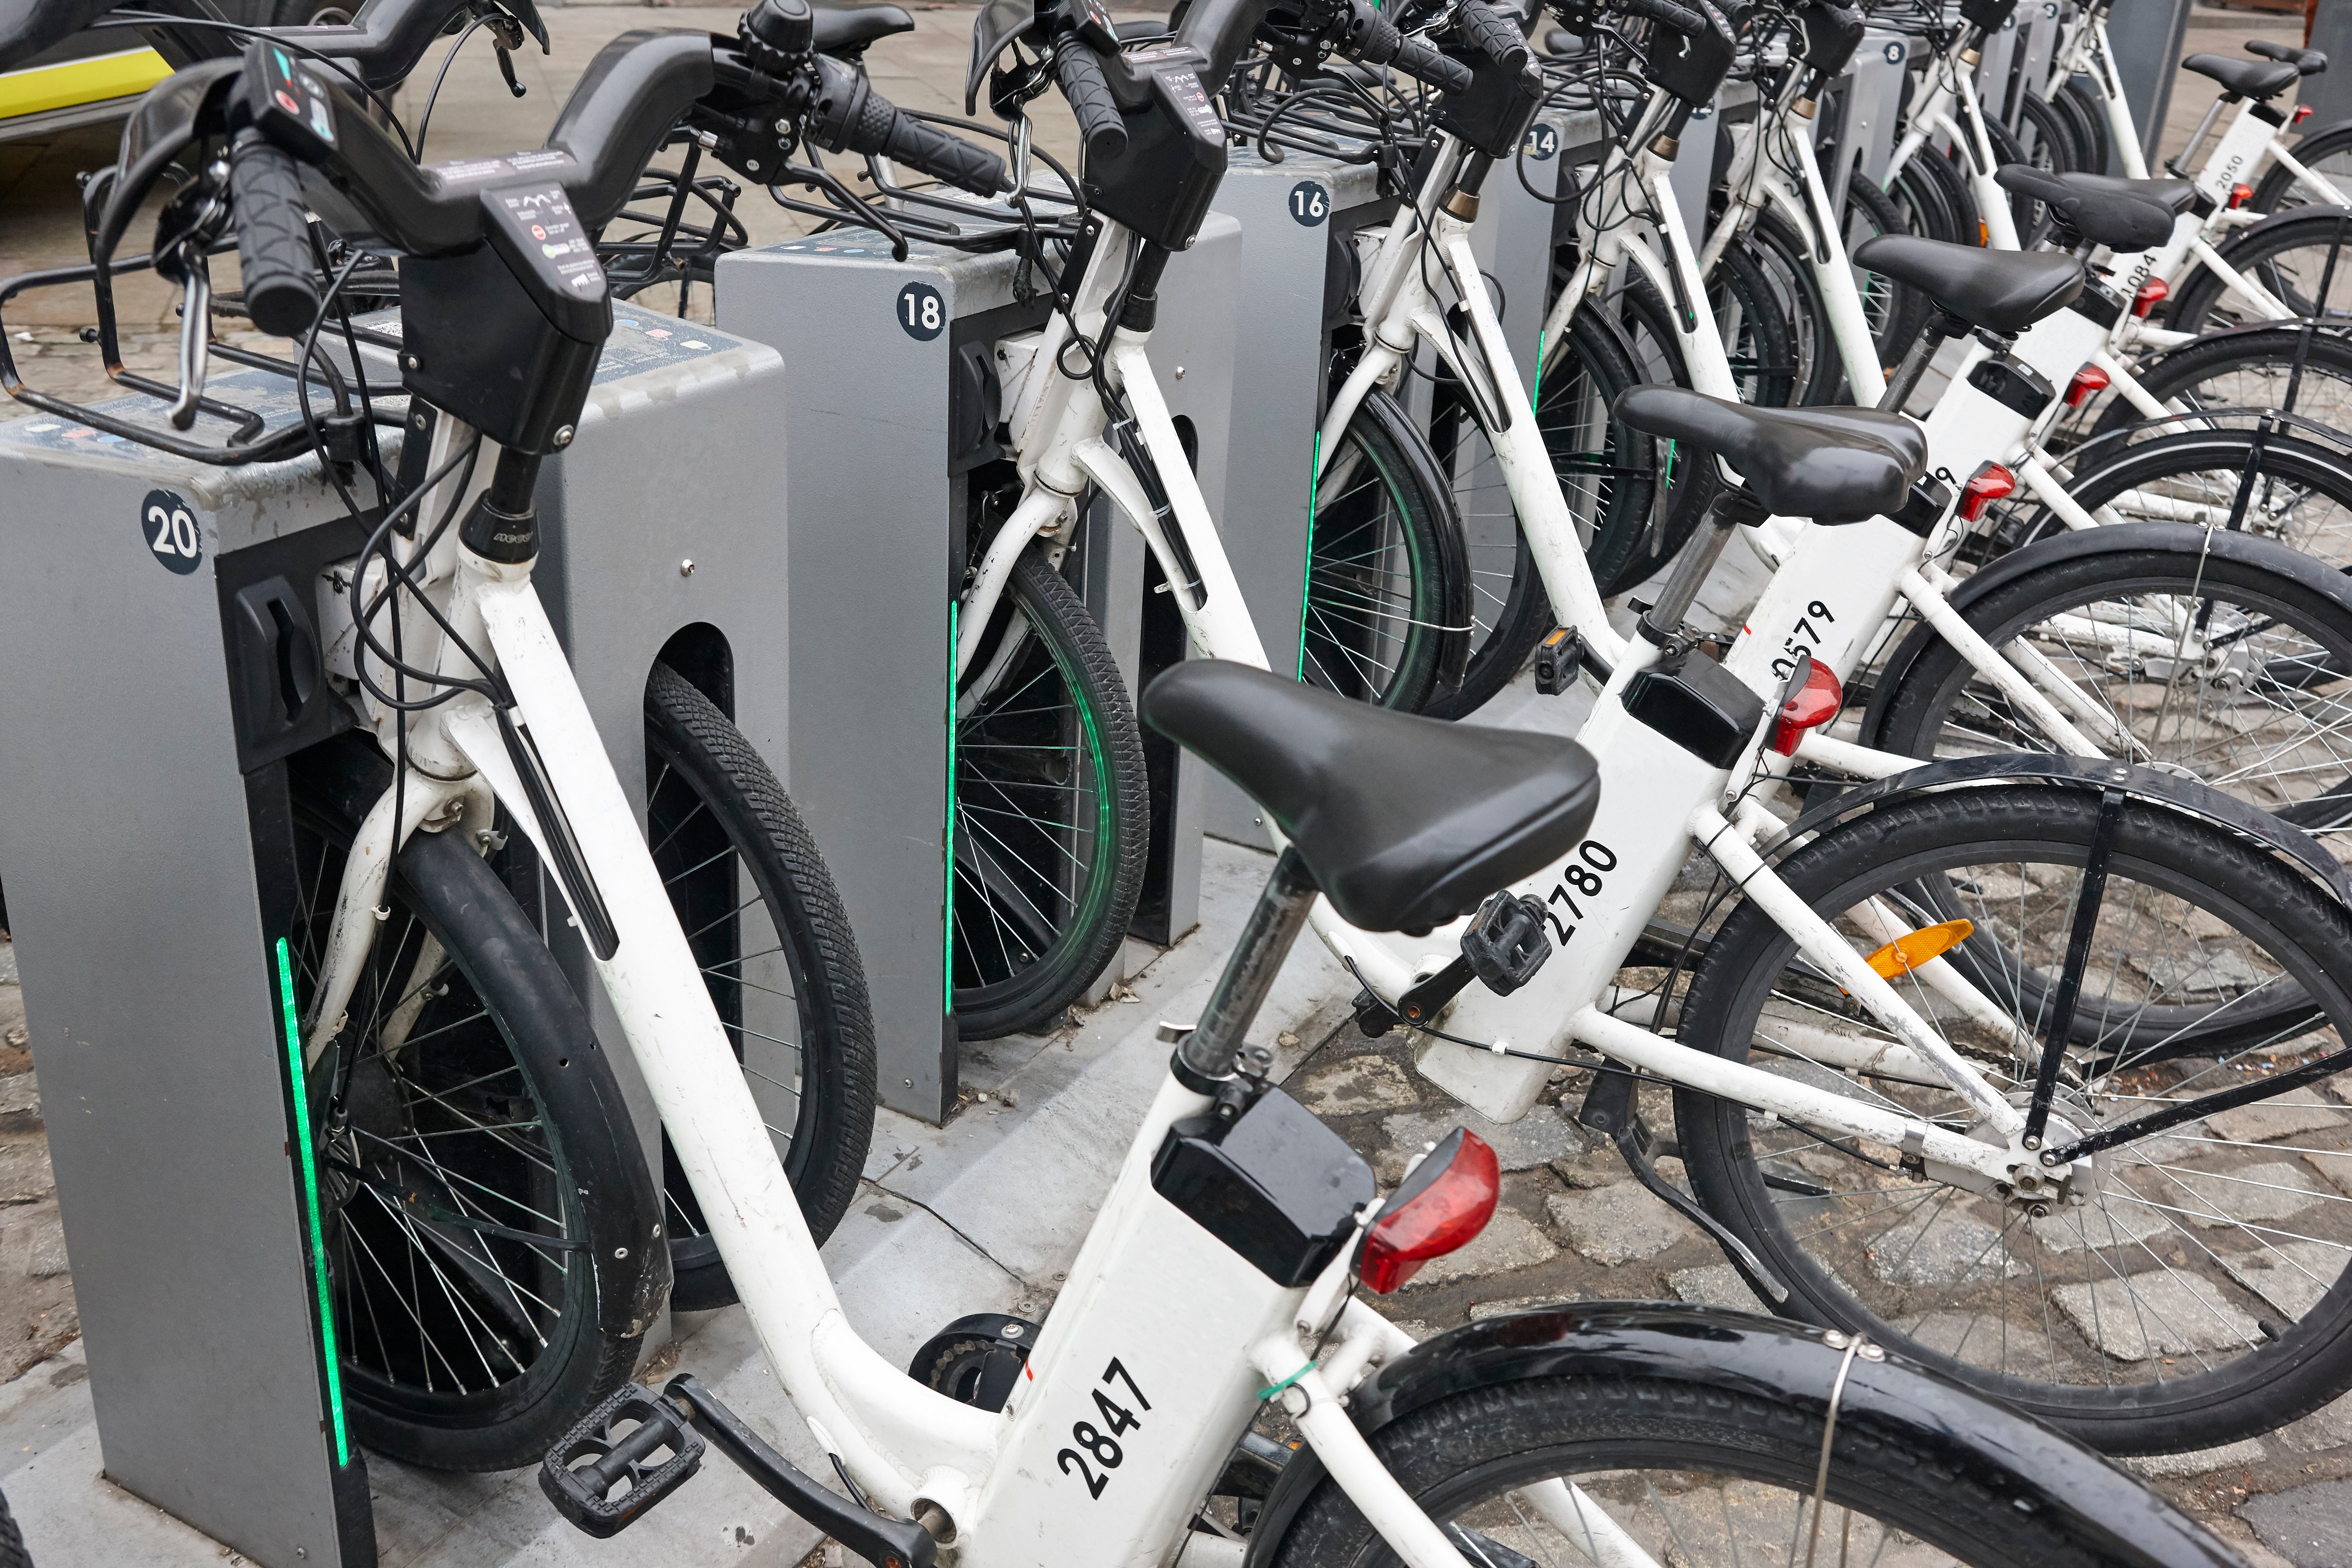 charging-electric-bikes-in-the-city-urban-green-t-2021-08-26-18-12-27-utc